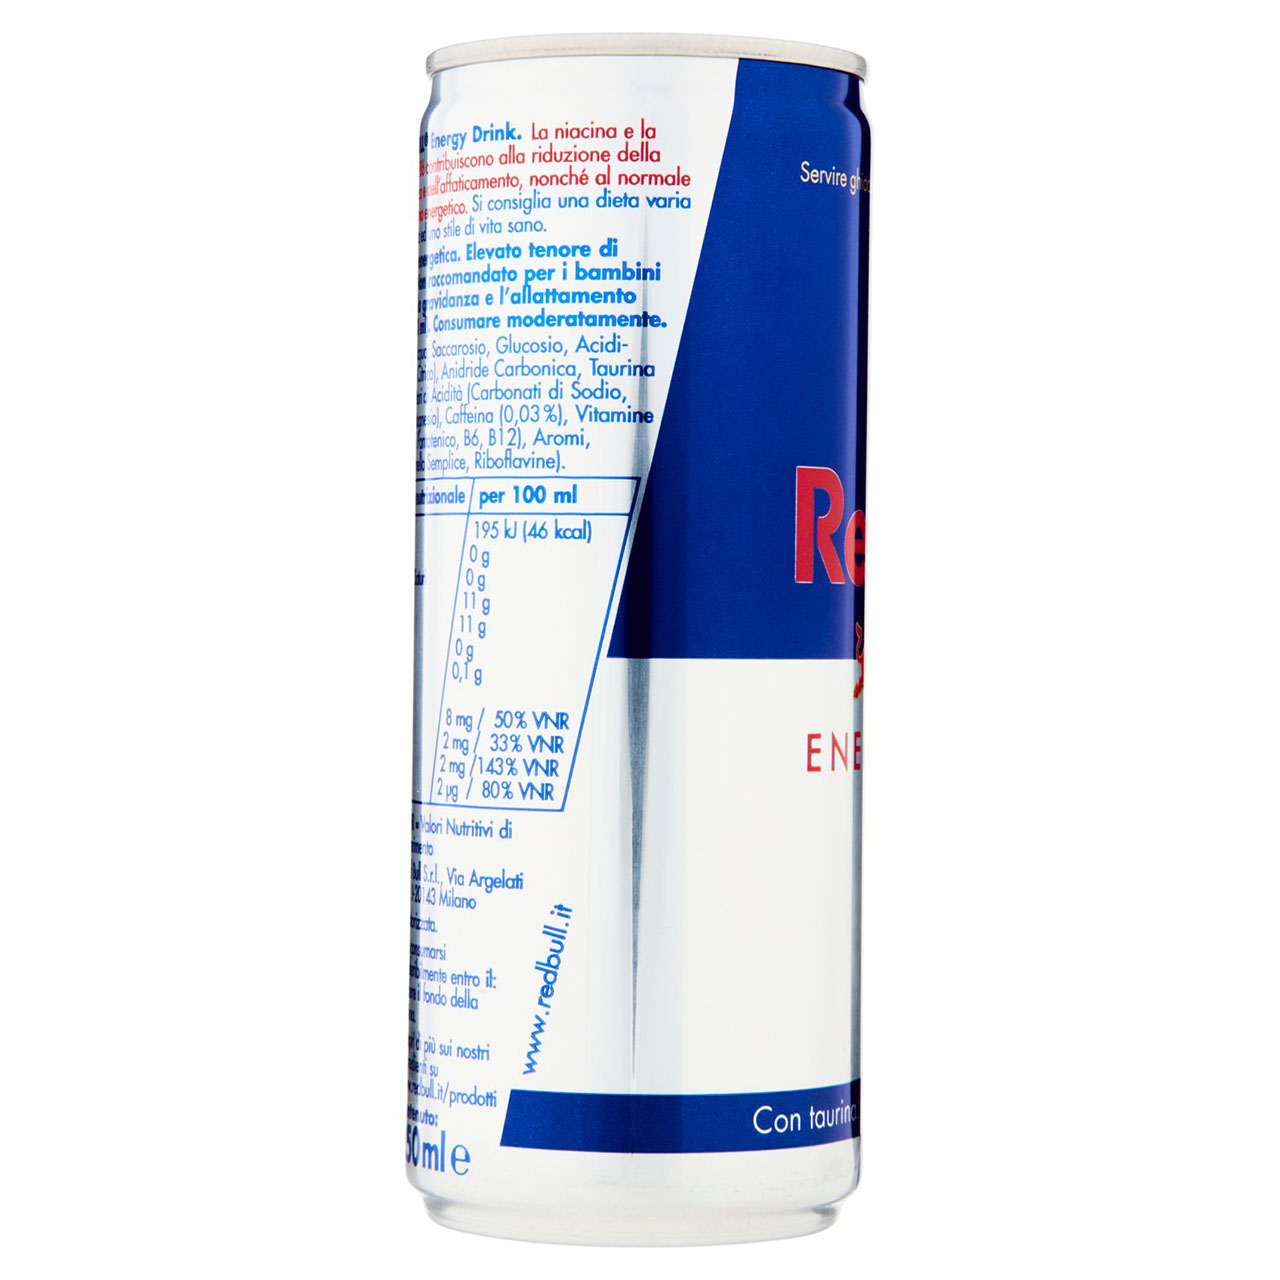 Red Bull Energy Drink, 250 ml in vendita online